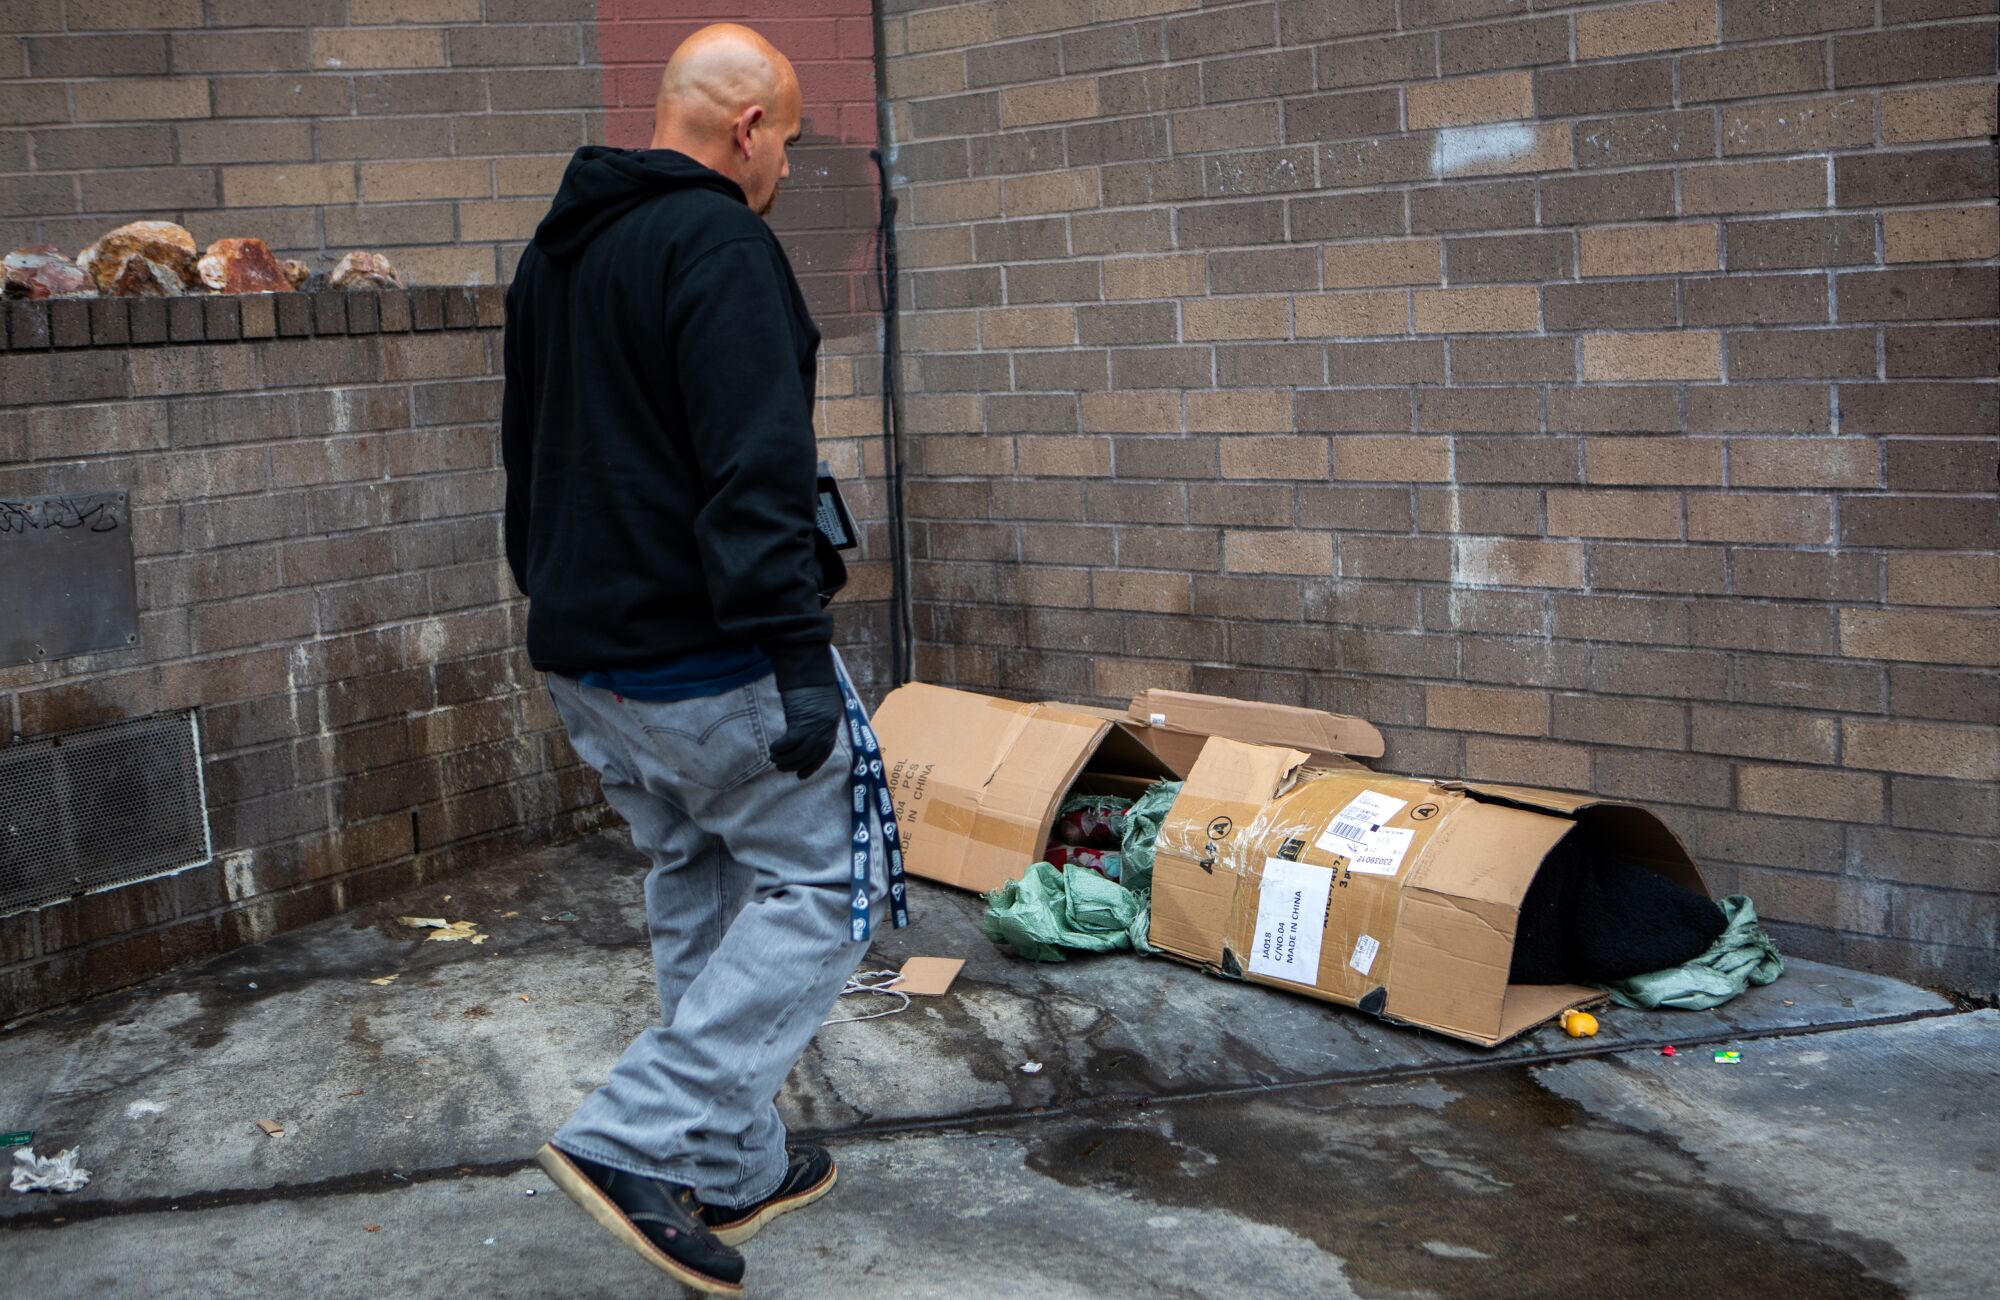 A man walks toward a person sleeping in a cardboard shelter.